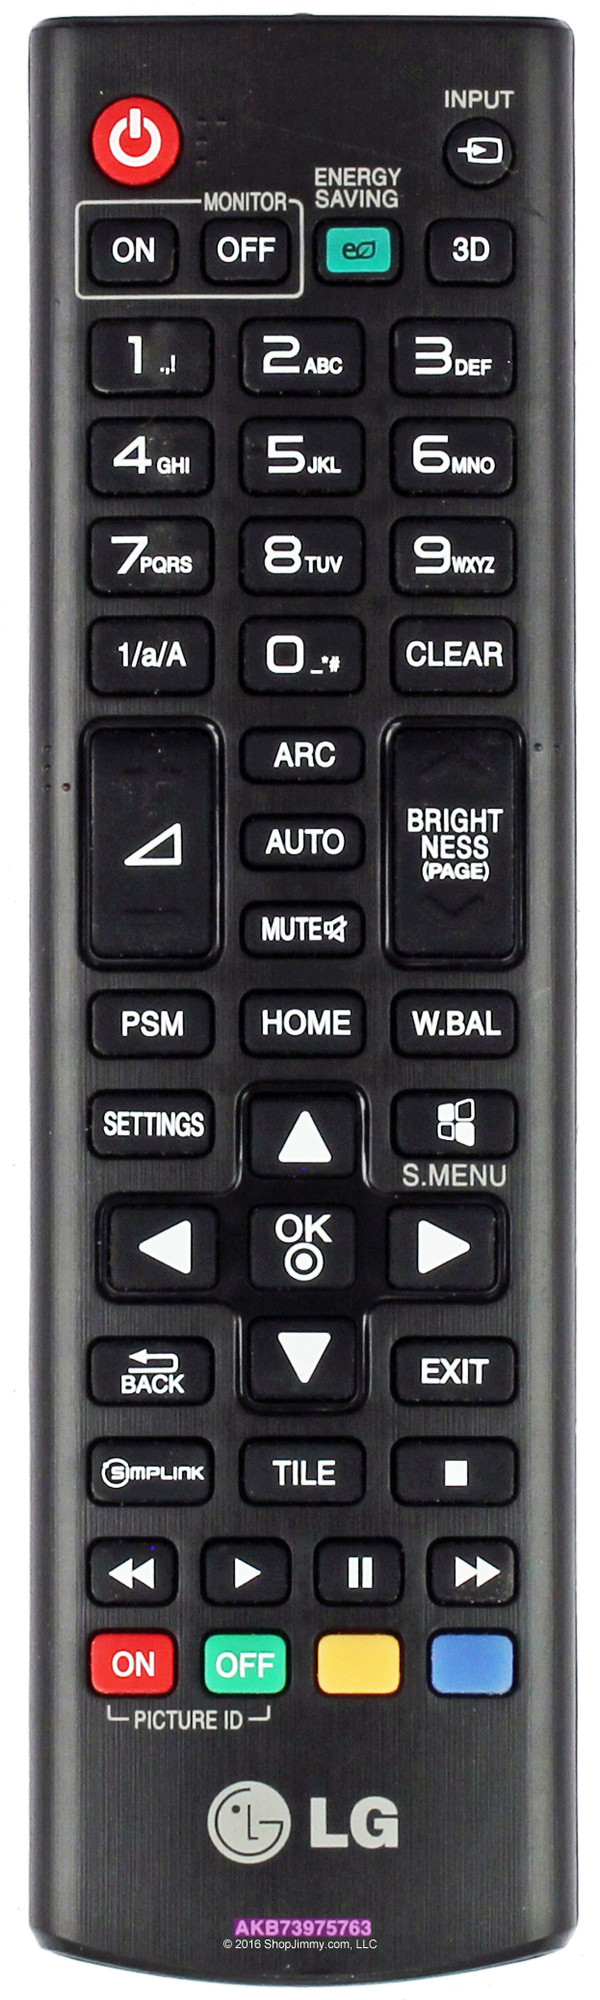 LG AKB73975763 Remote Control - New